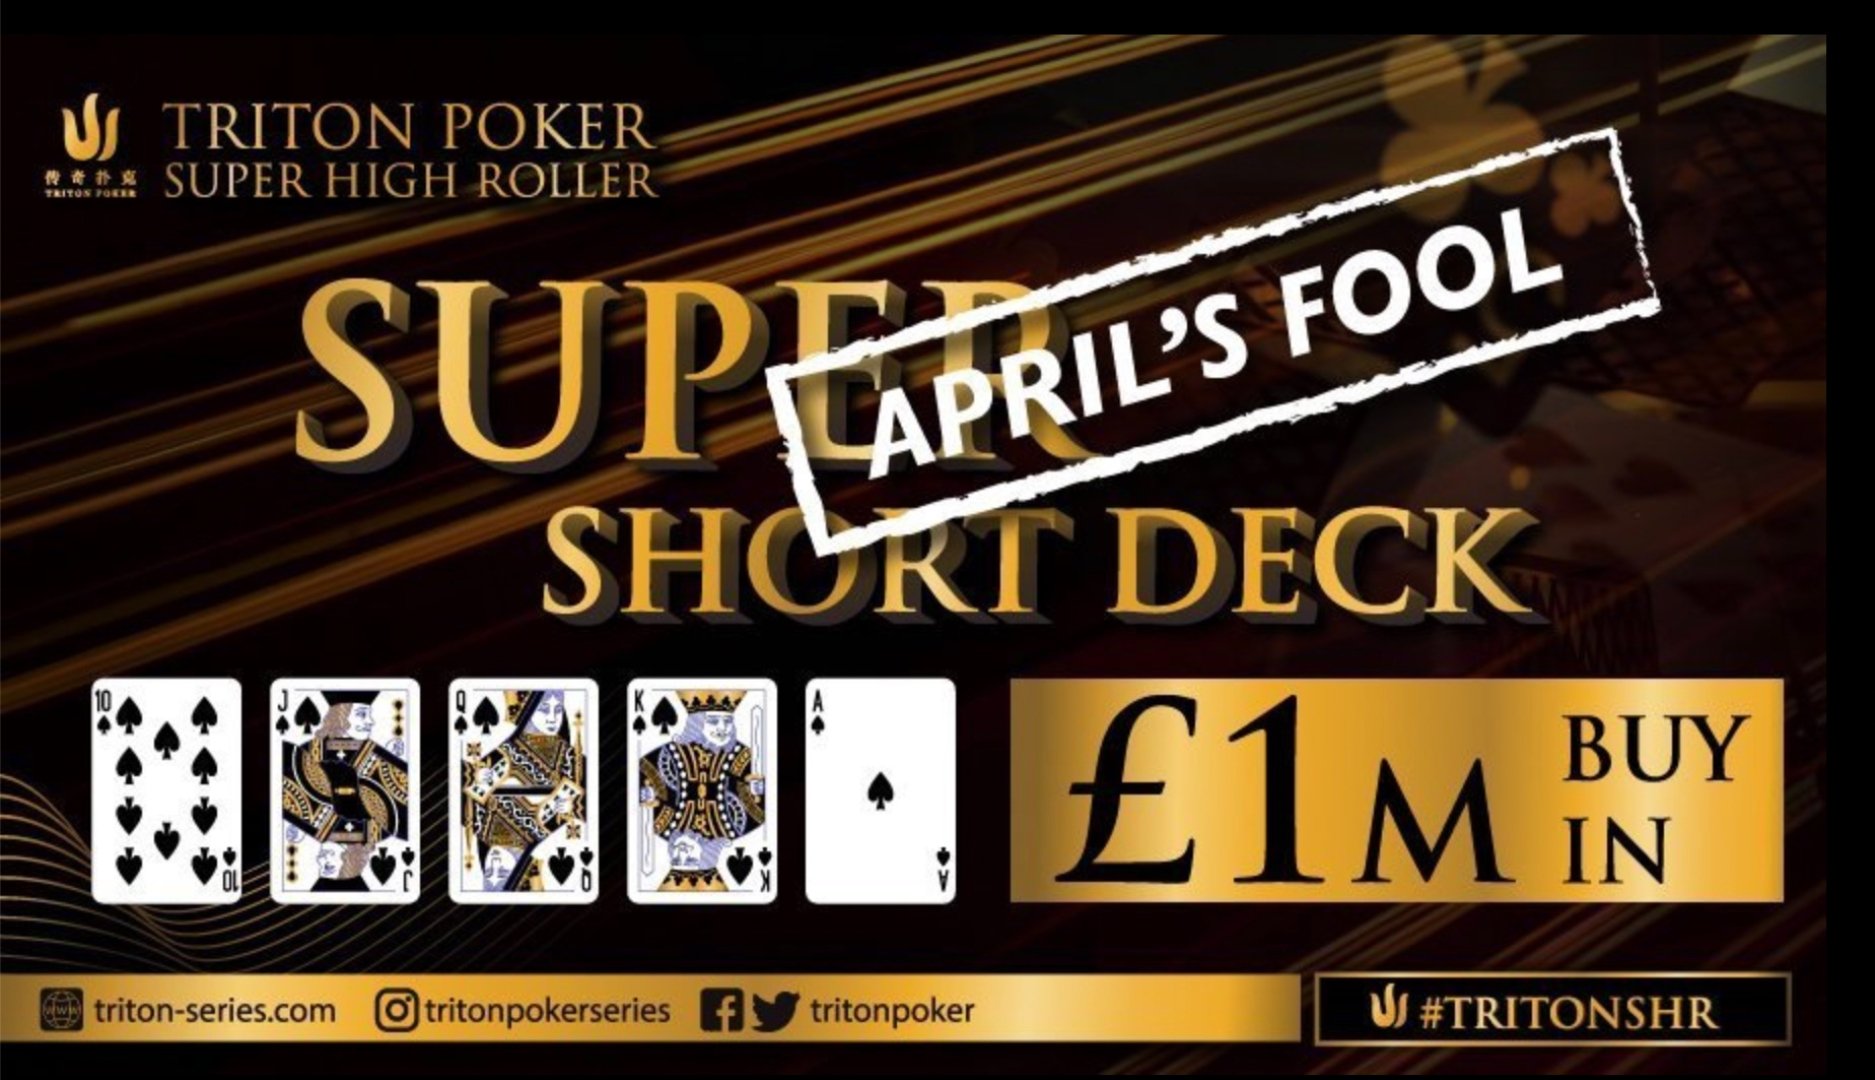 Triton Poker Series £1m Short Deck Spoof